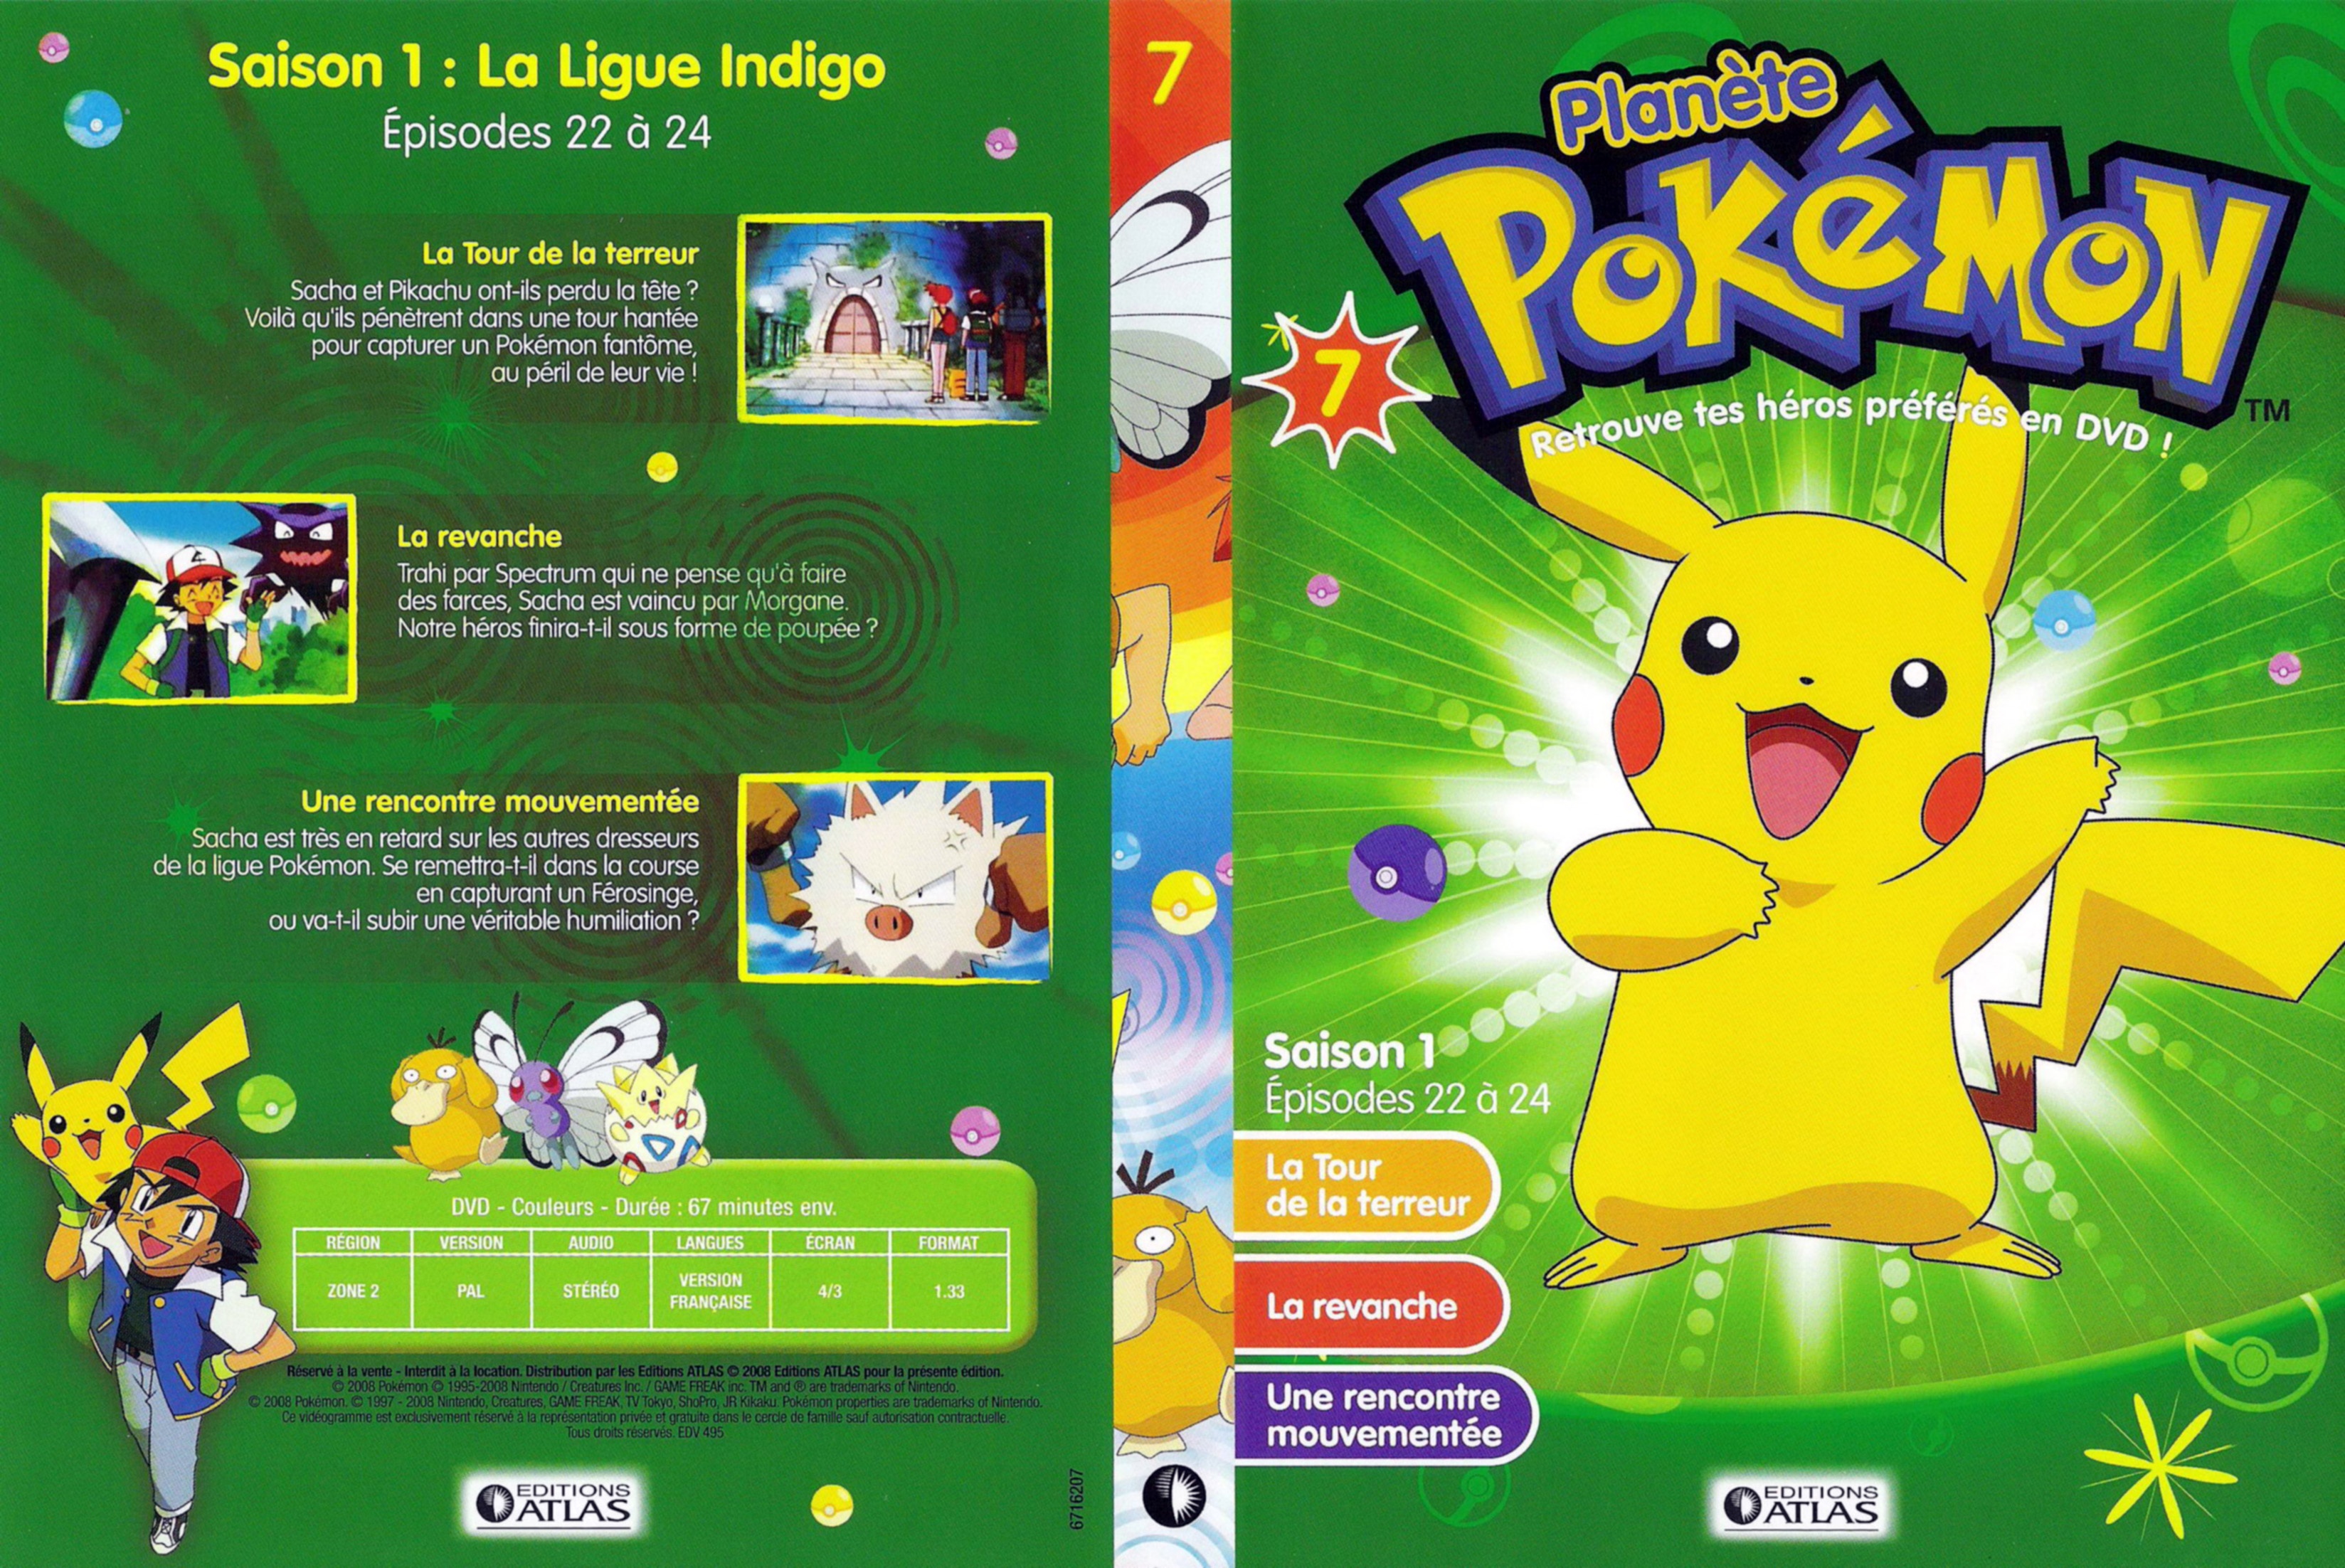 Jaquette DVD Plenete Pokemon vol 07